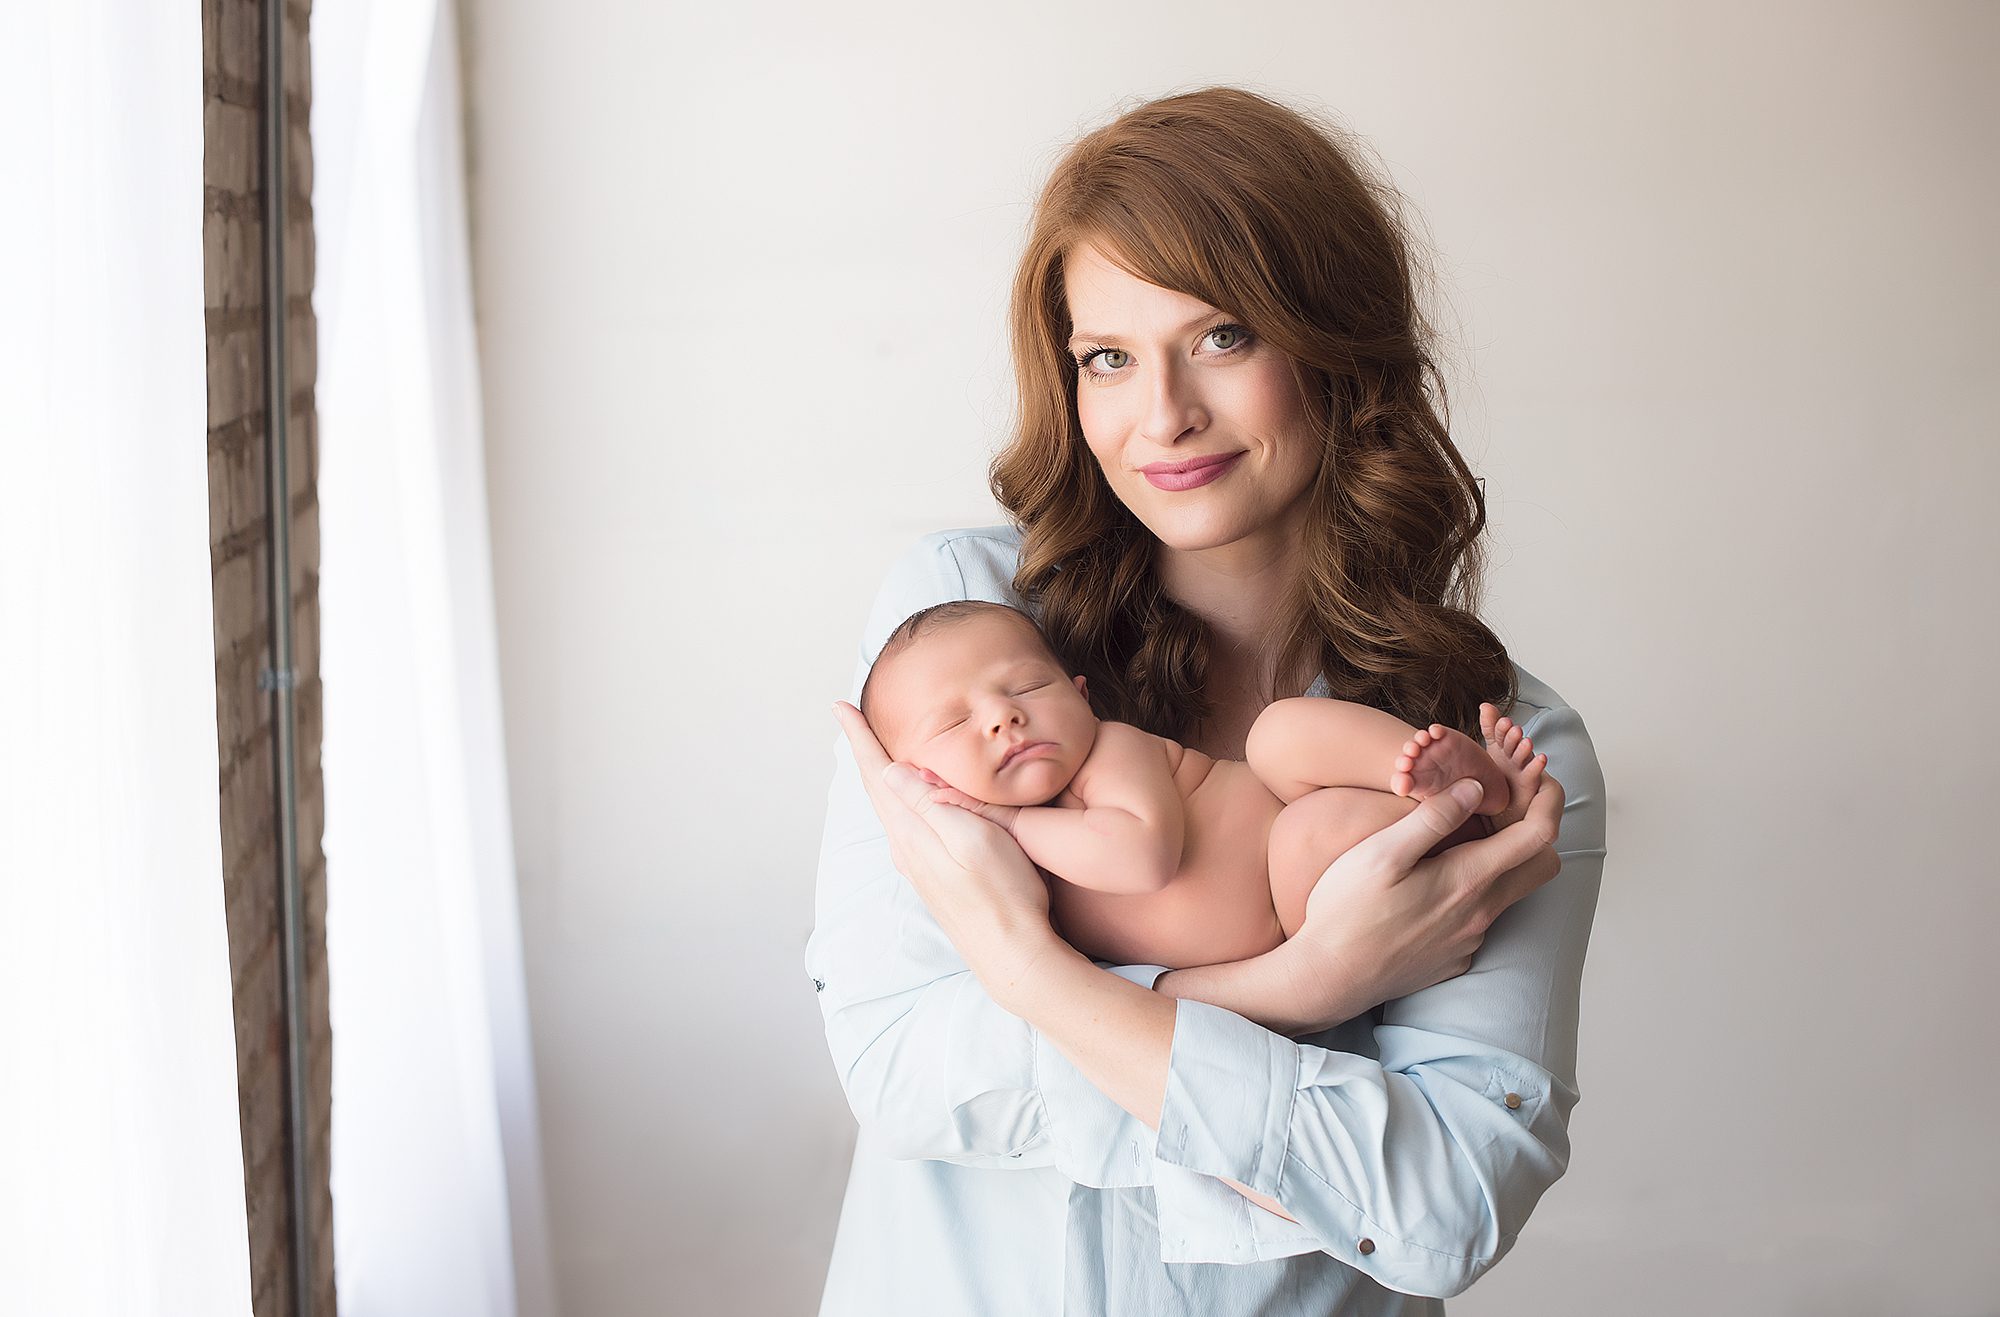 redheaded mom wearing a blue shirt and holding newborn baby boy